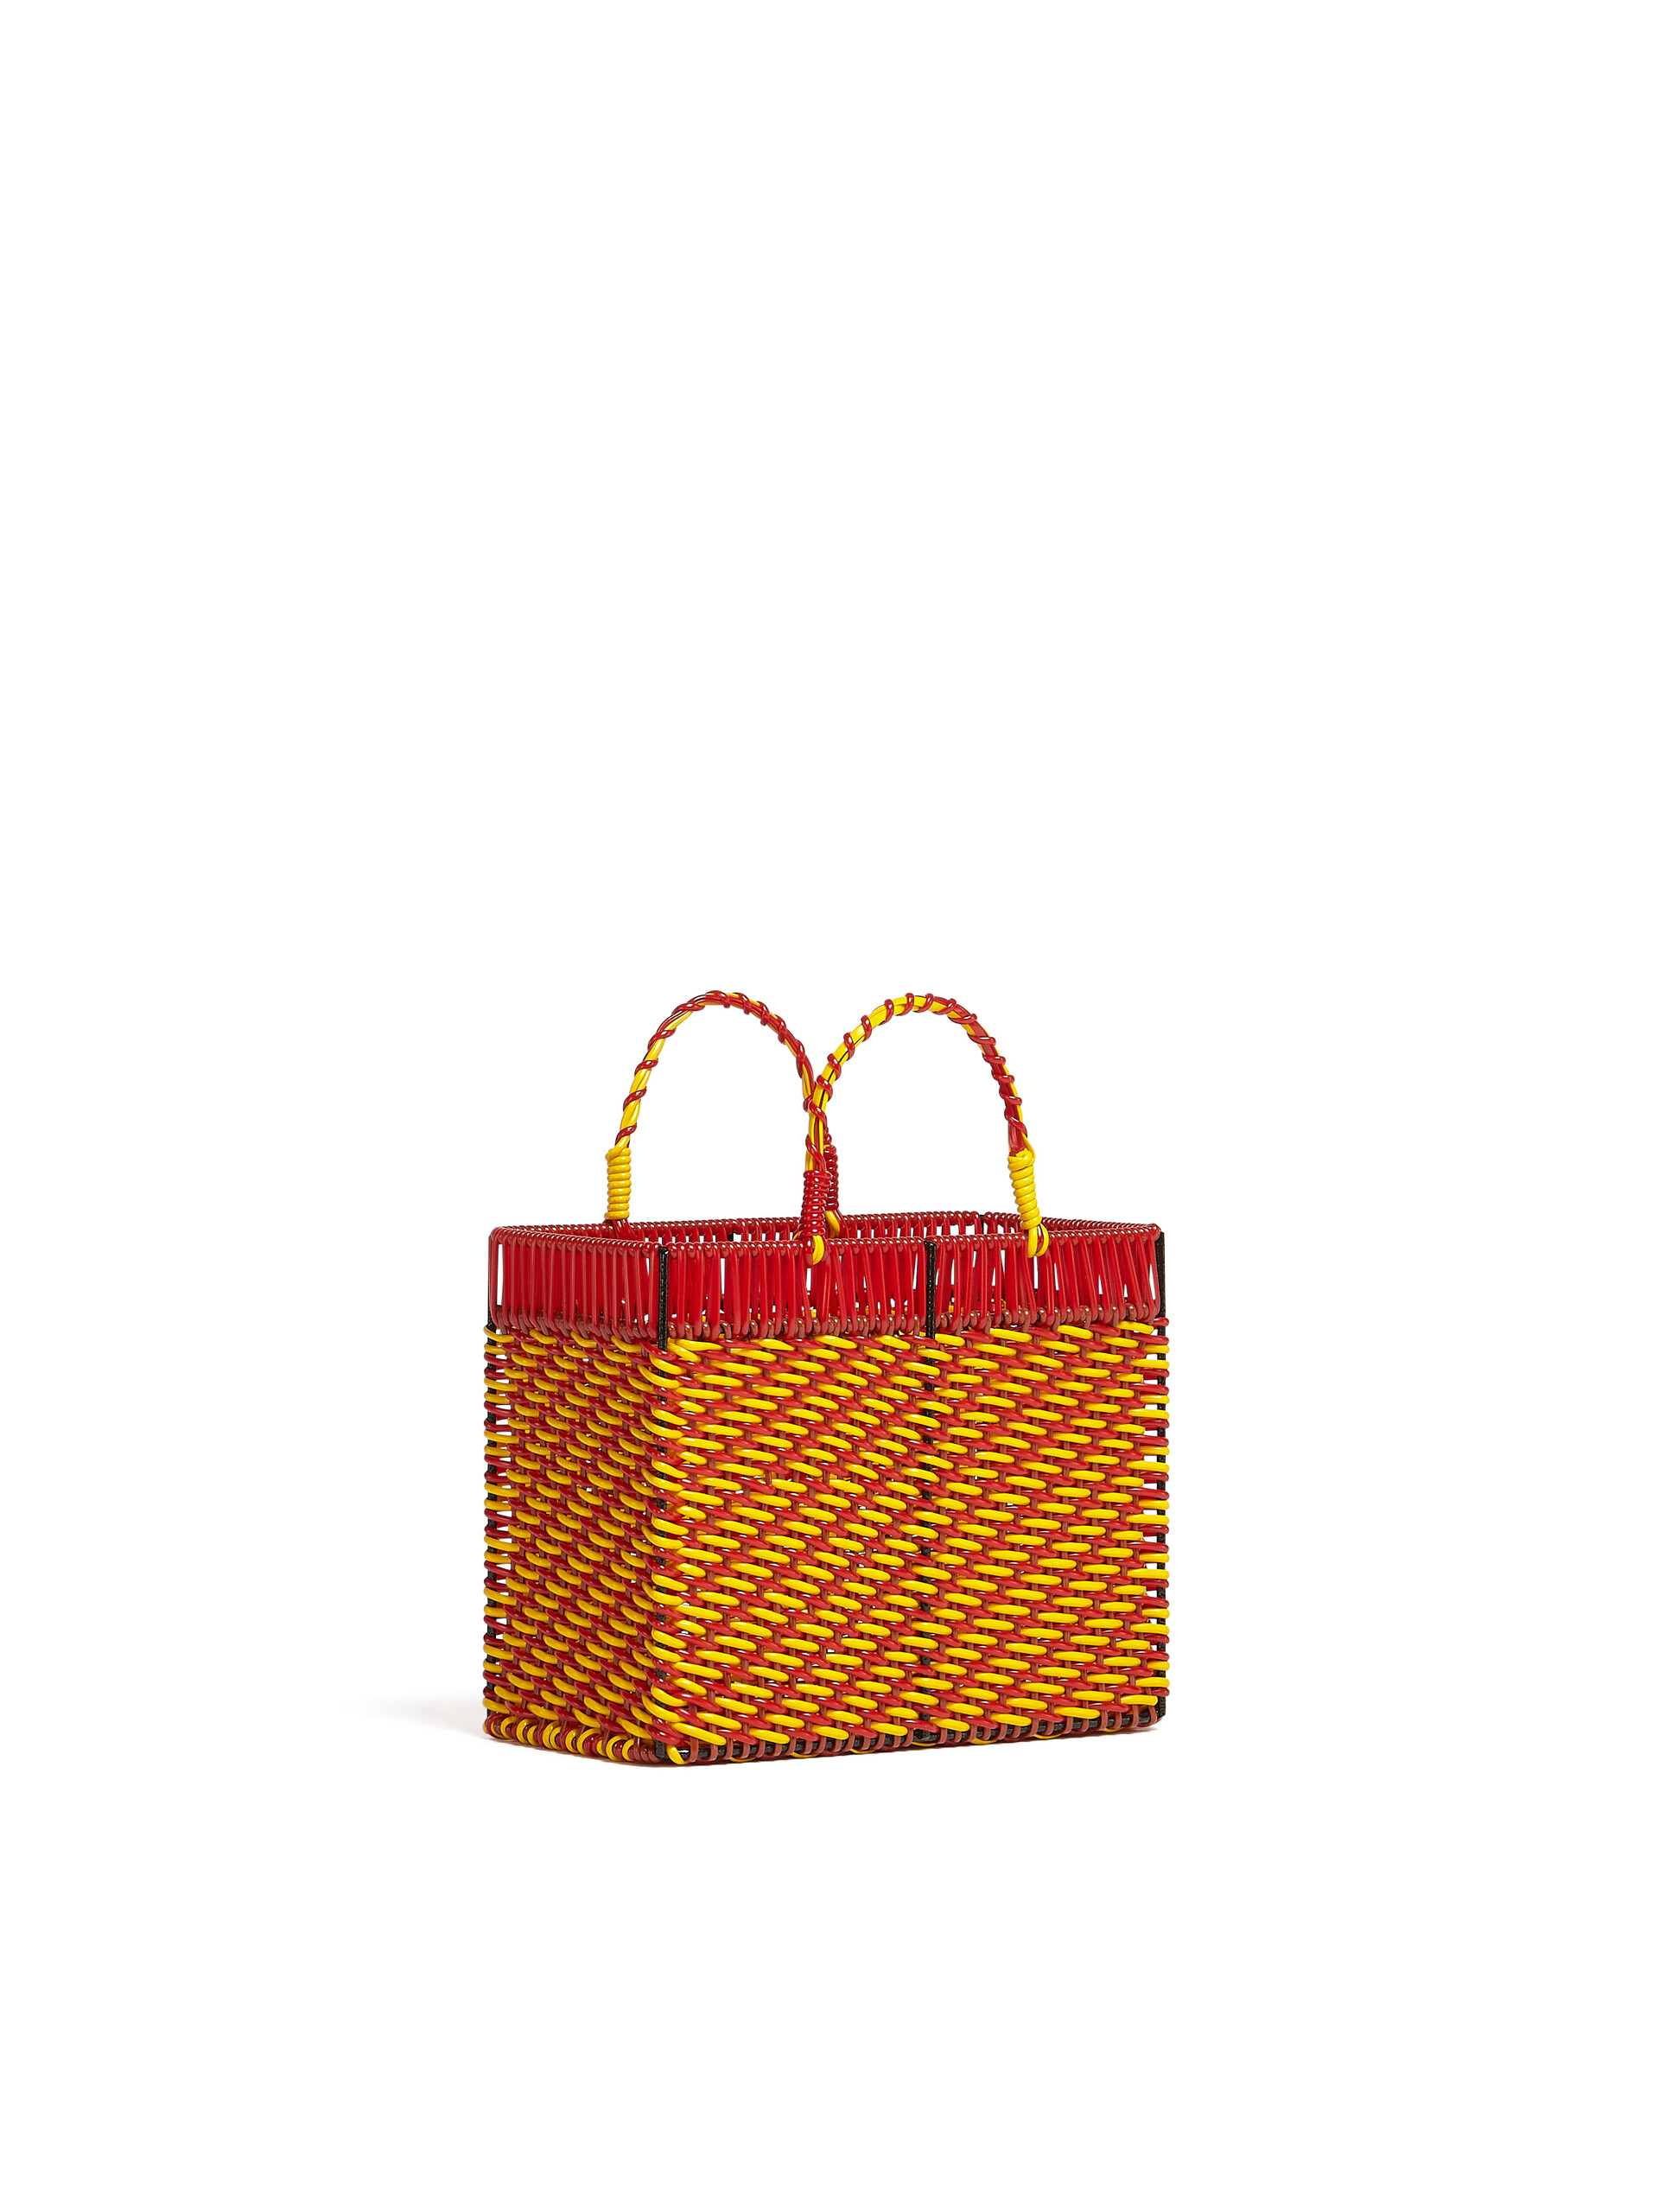 MARNI MARKET orange and red basket - Accessories - Image 2